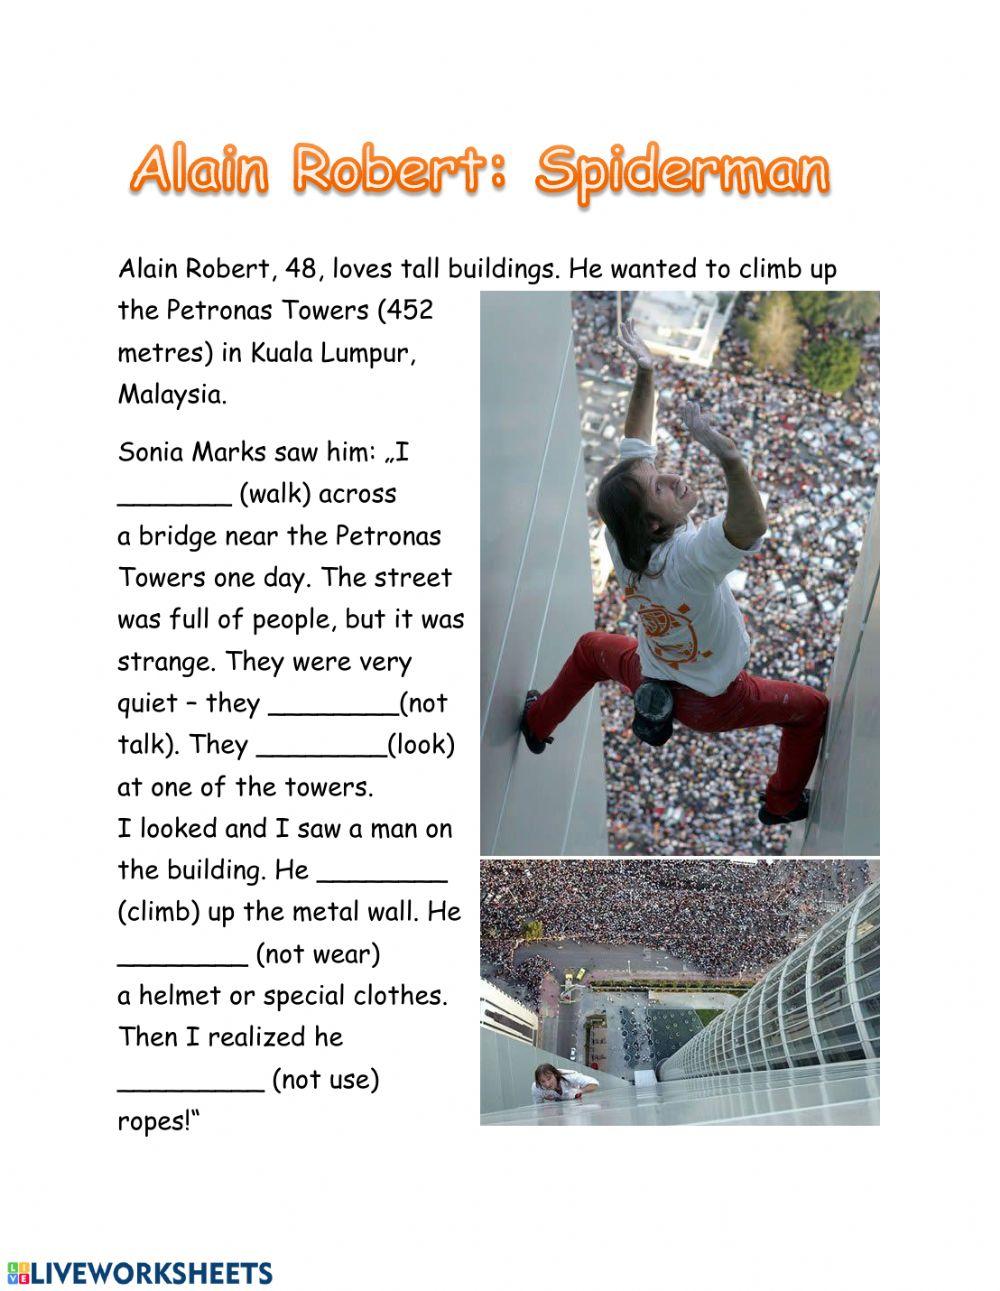 Alain Roberts: Spiderman